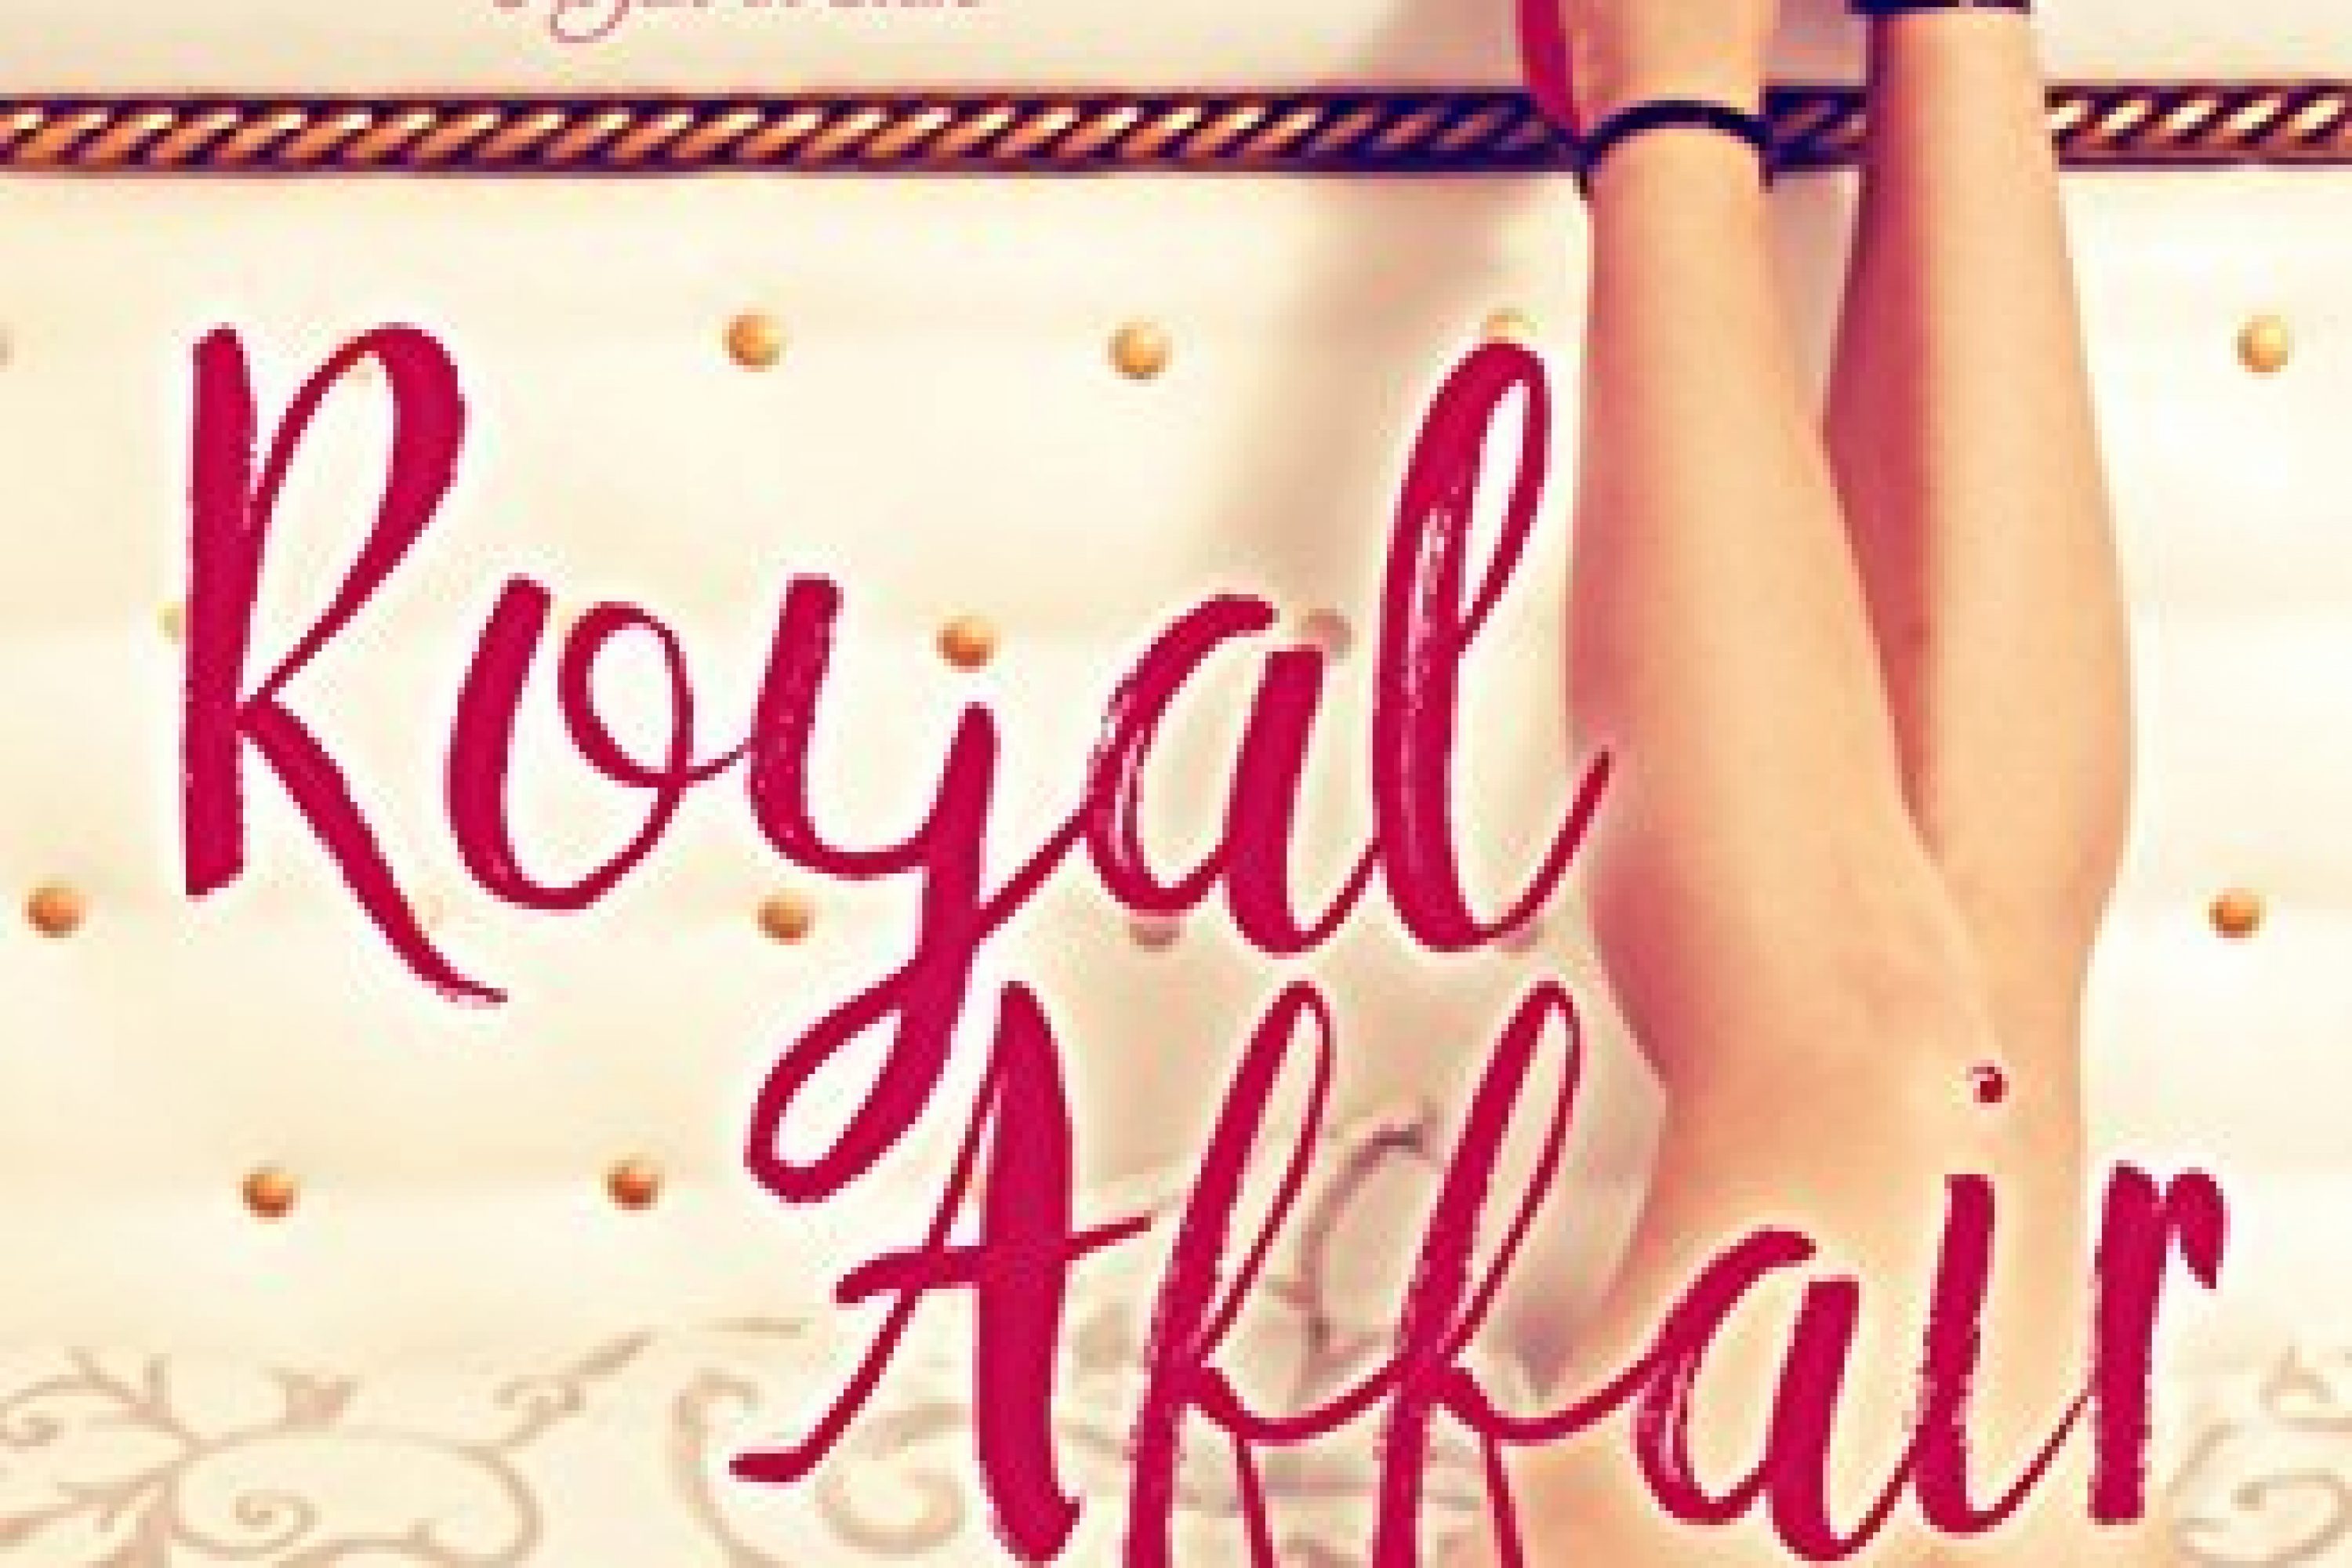 Royal Affair